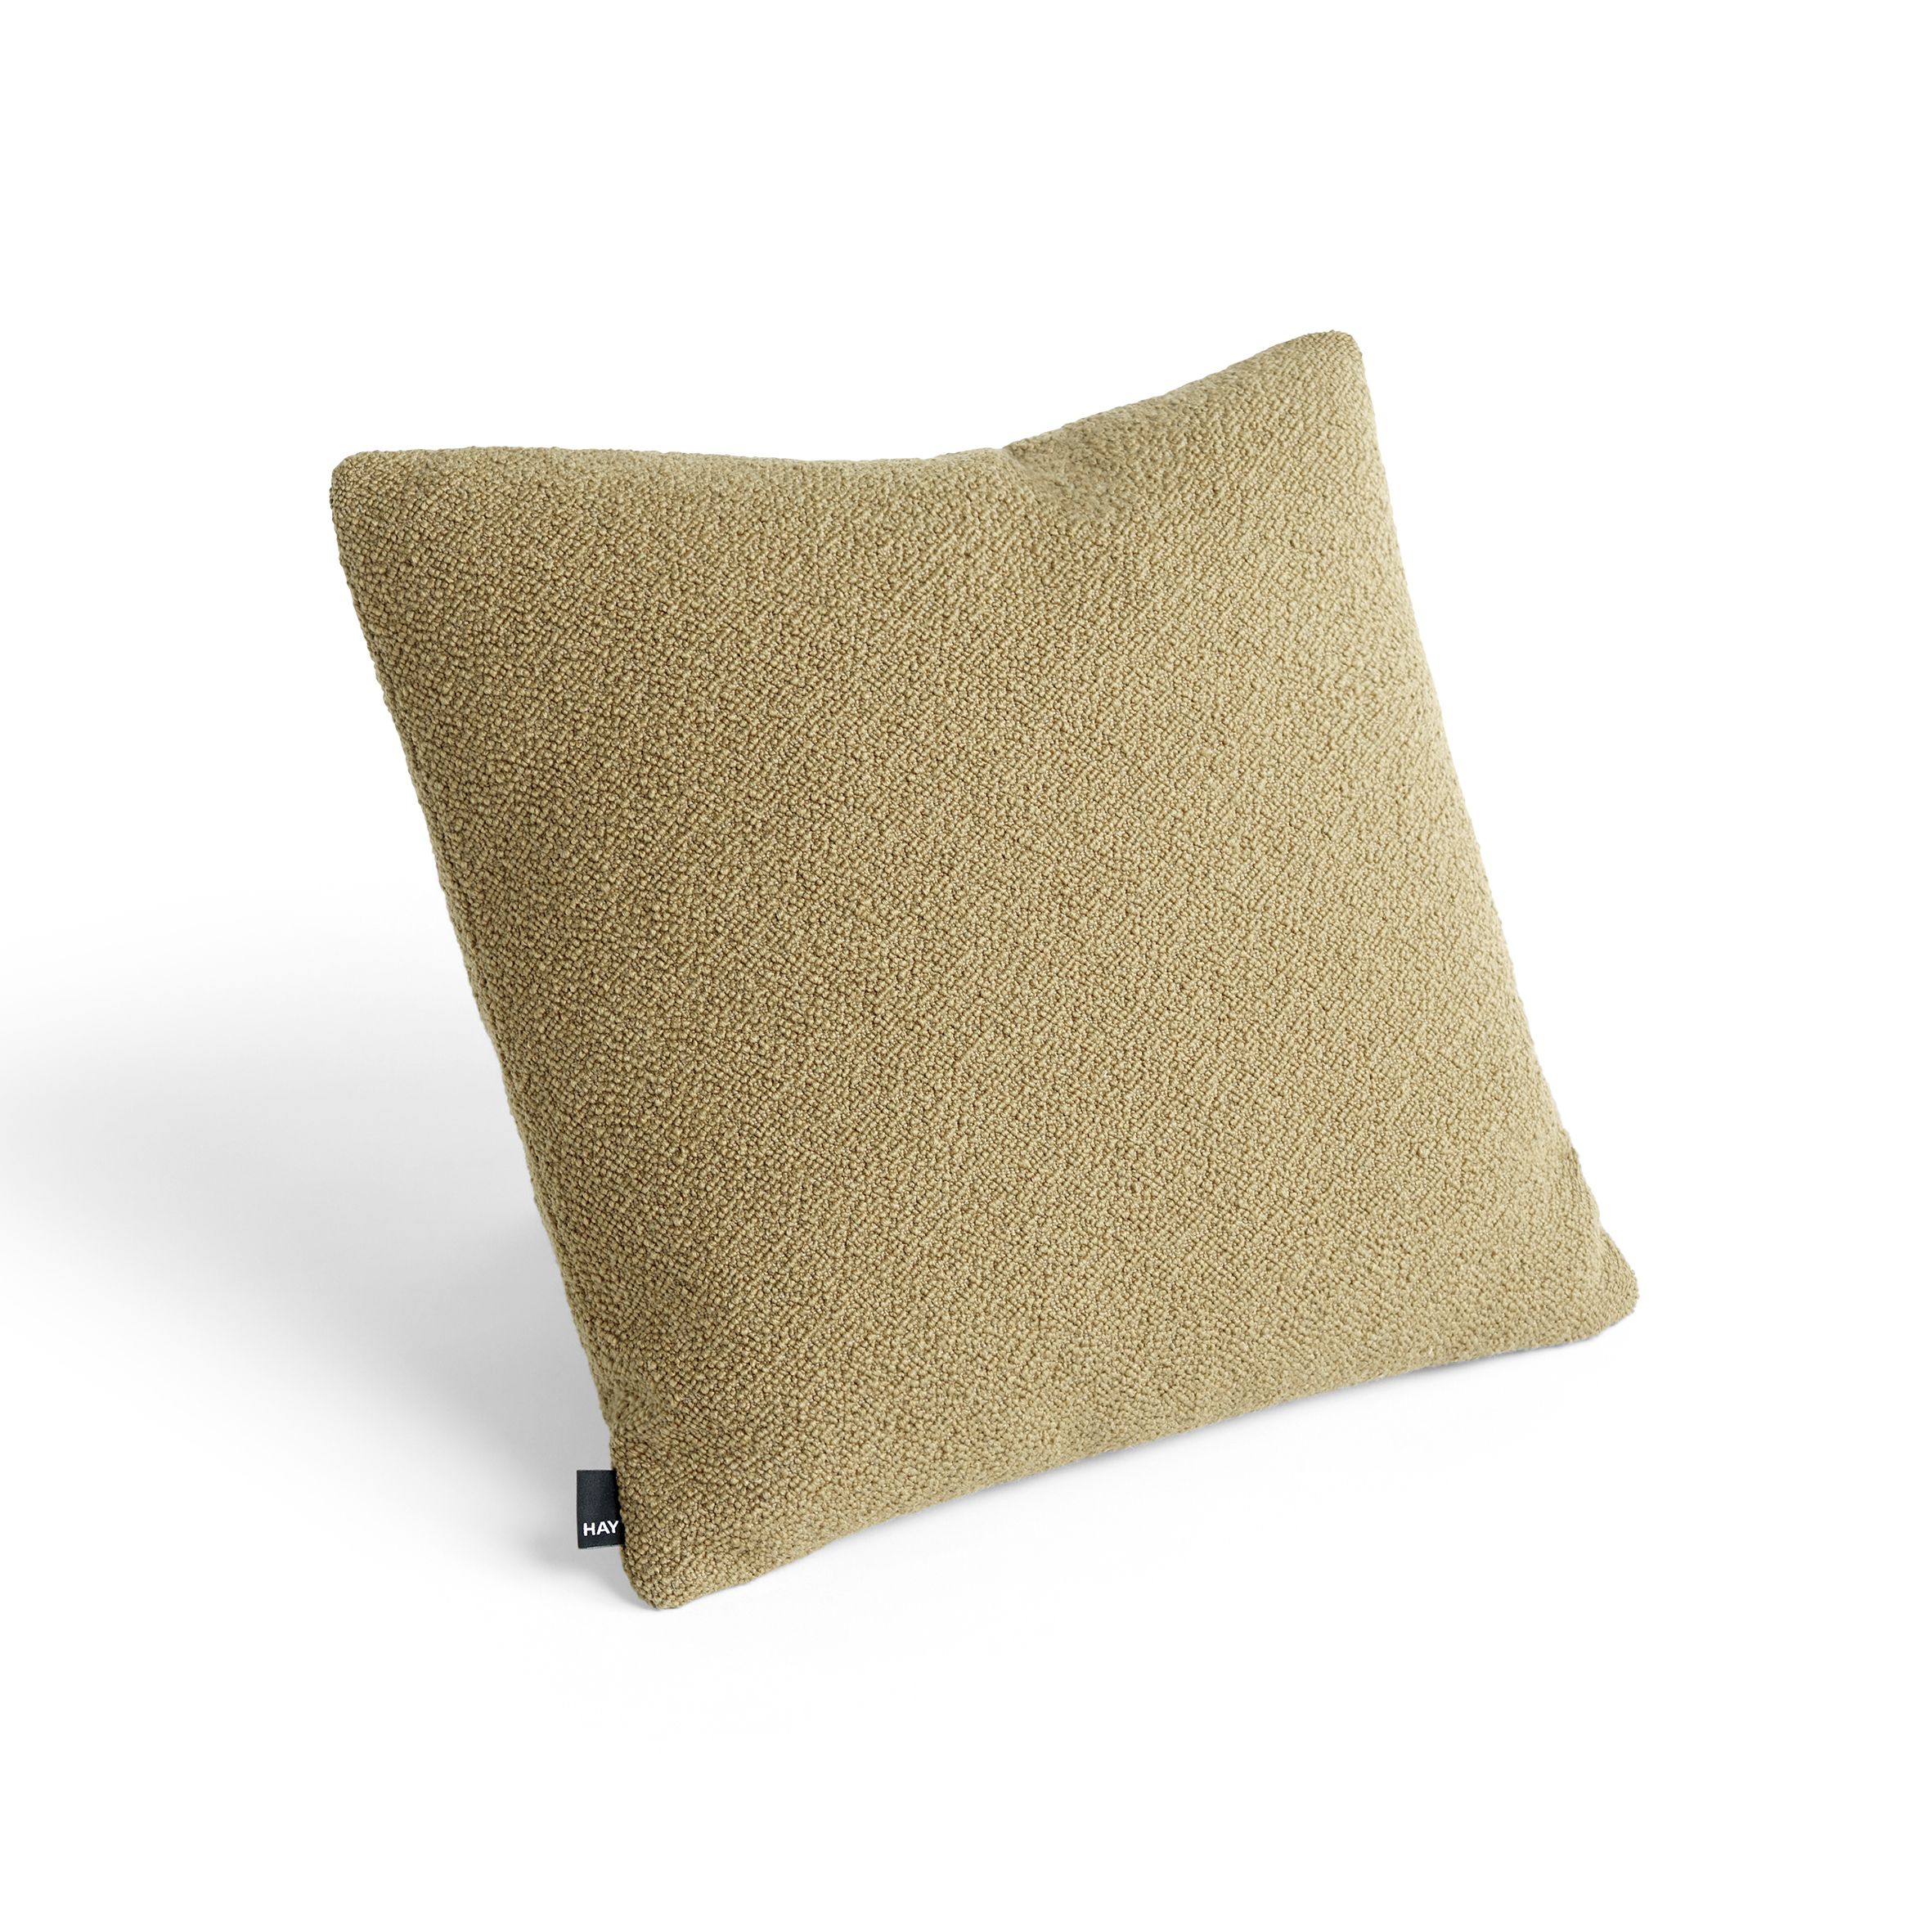 Texture cushion - Olive